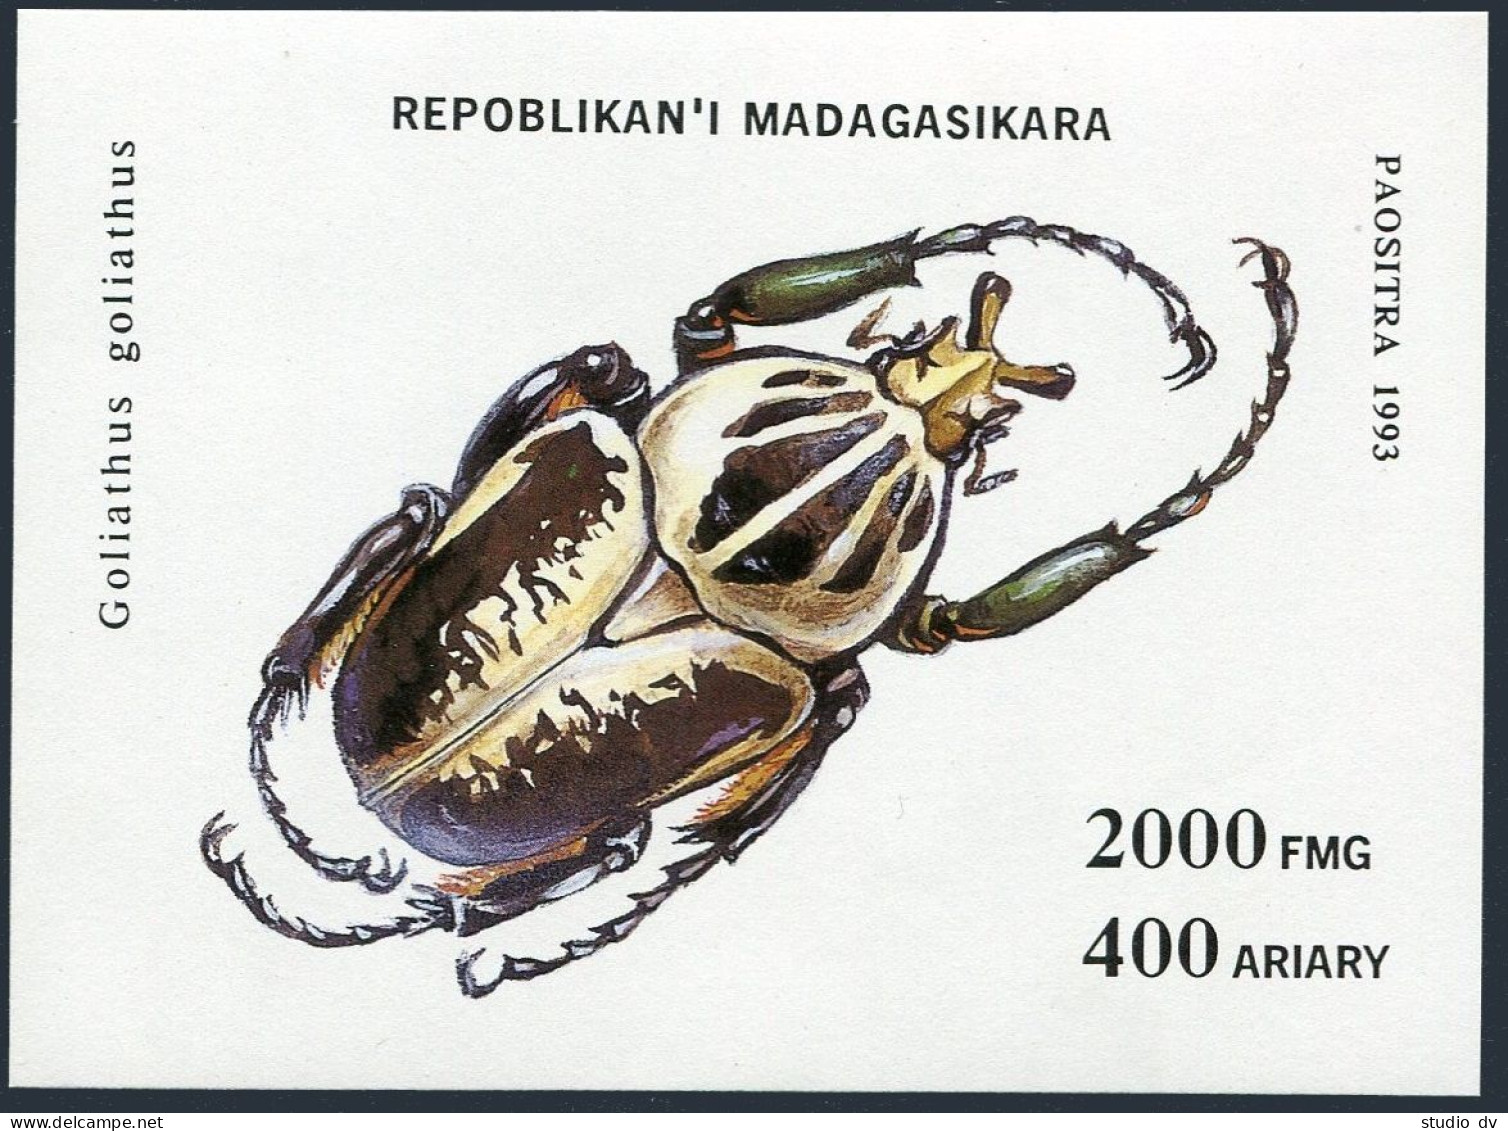 Malagasy 1216-1222, 1223, MNH. Michel 1656-1661, Bl.254. Insects 1994. Beetles. - Madagaskar (1960-...)